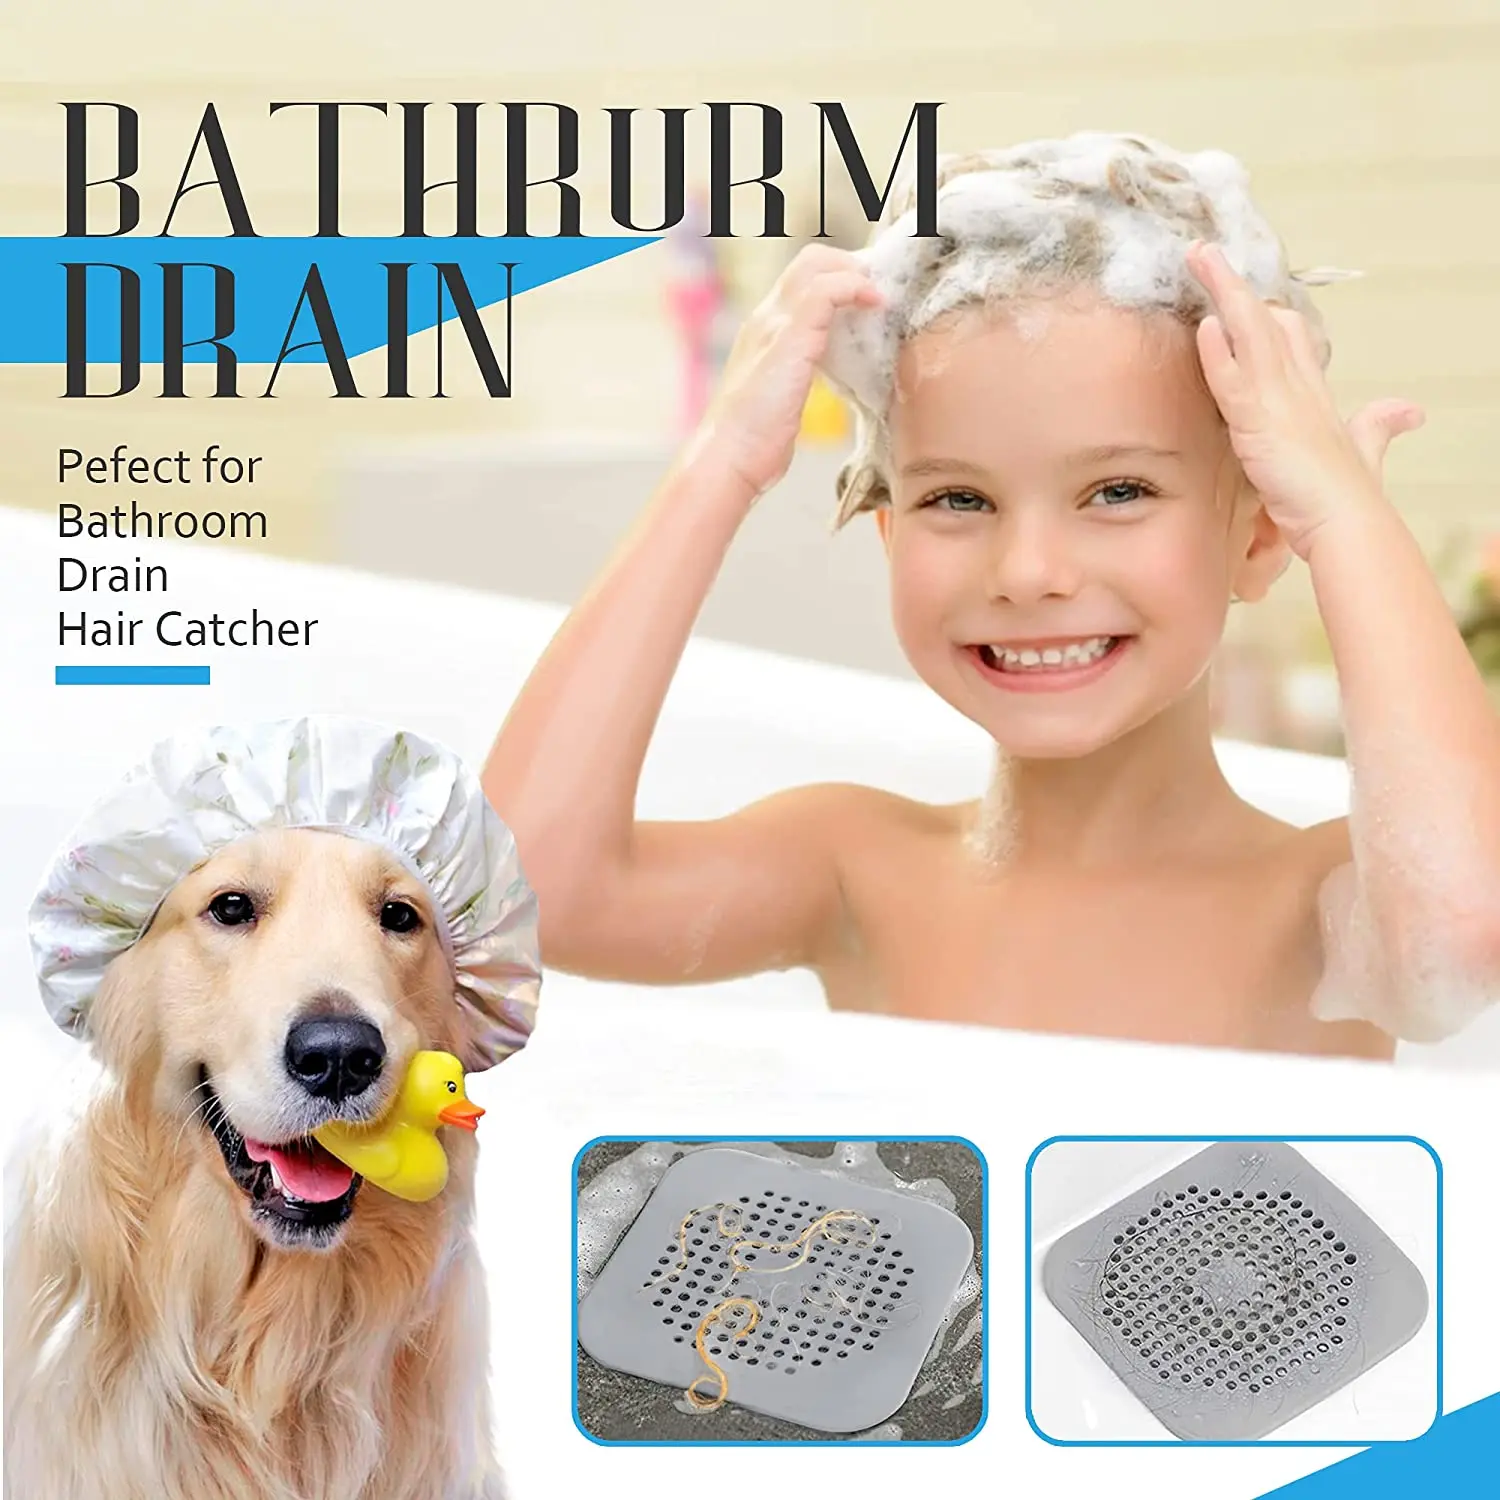 Hair Catcher Shower Drain, Drain Durable TPR Silicone Square 5.5